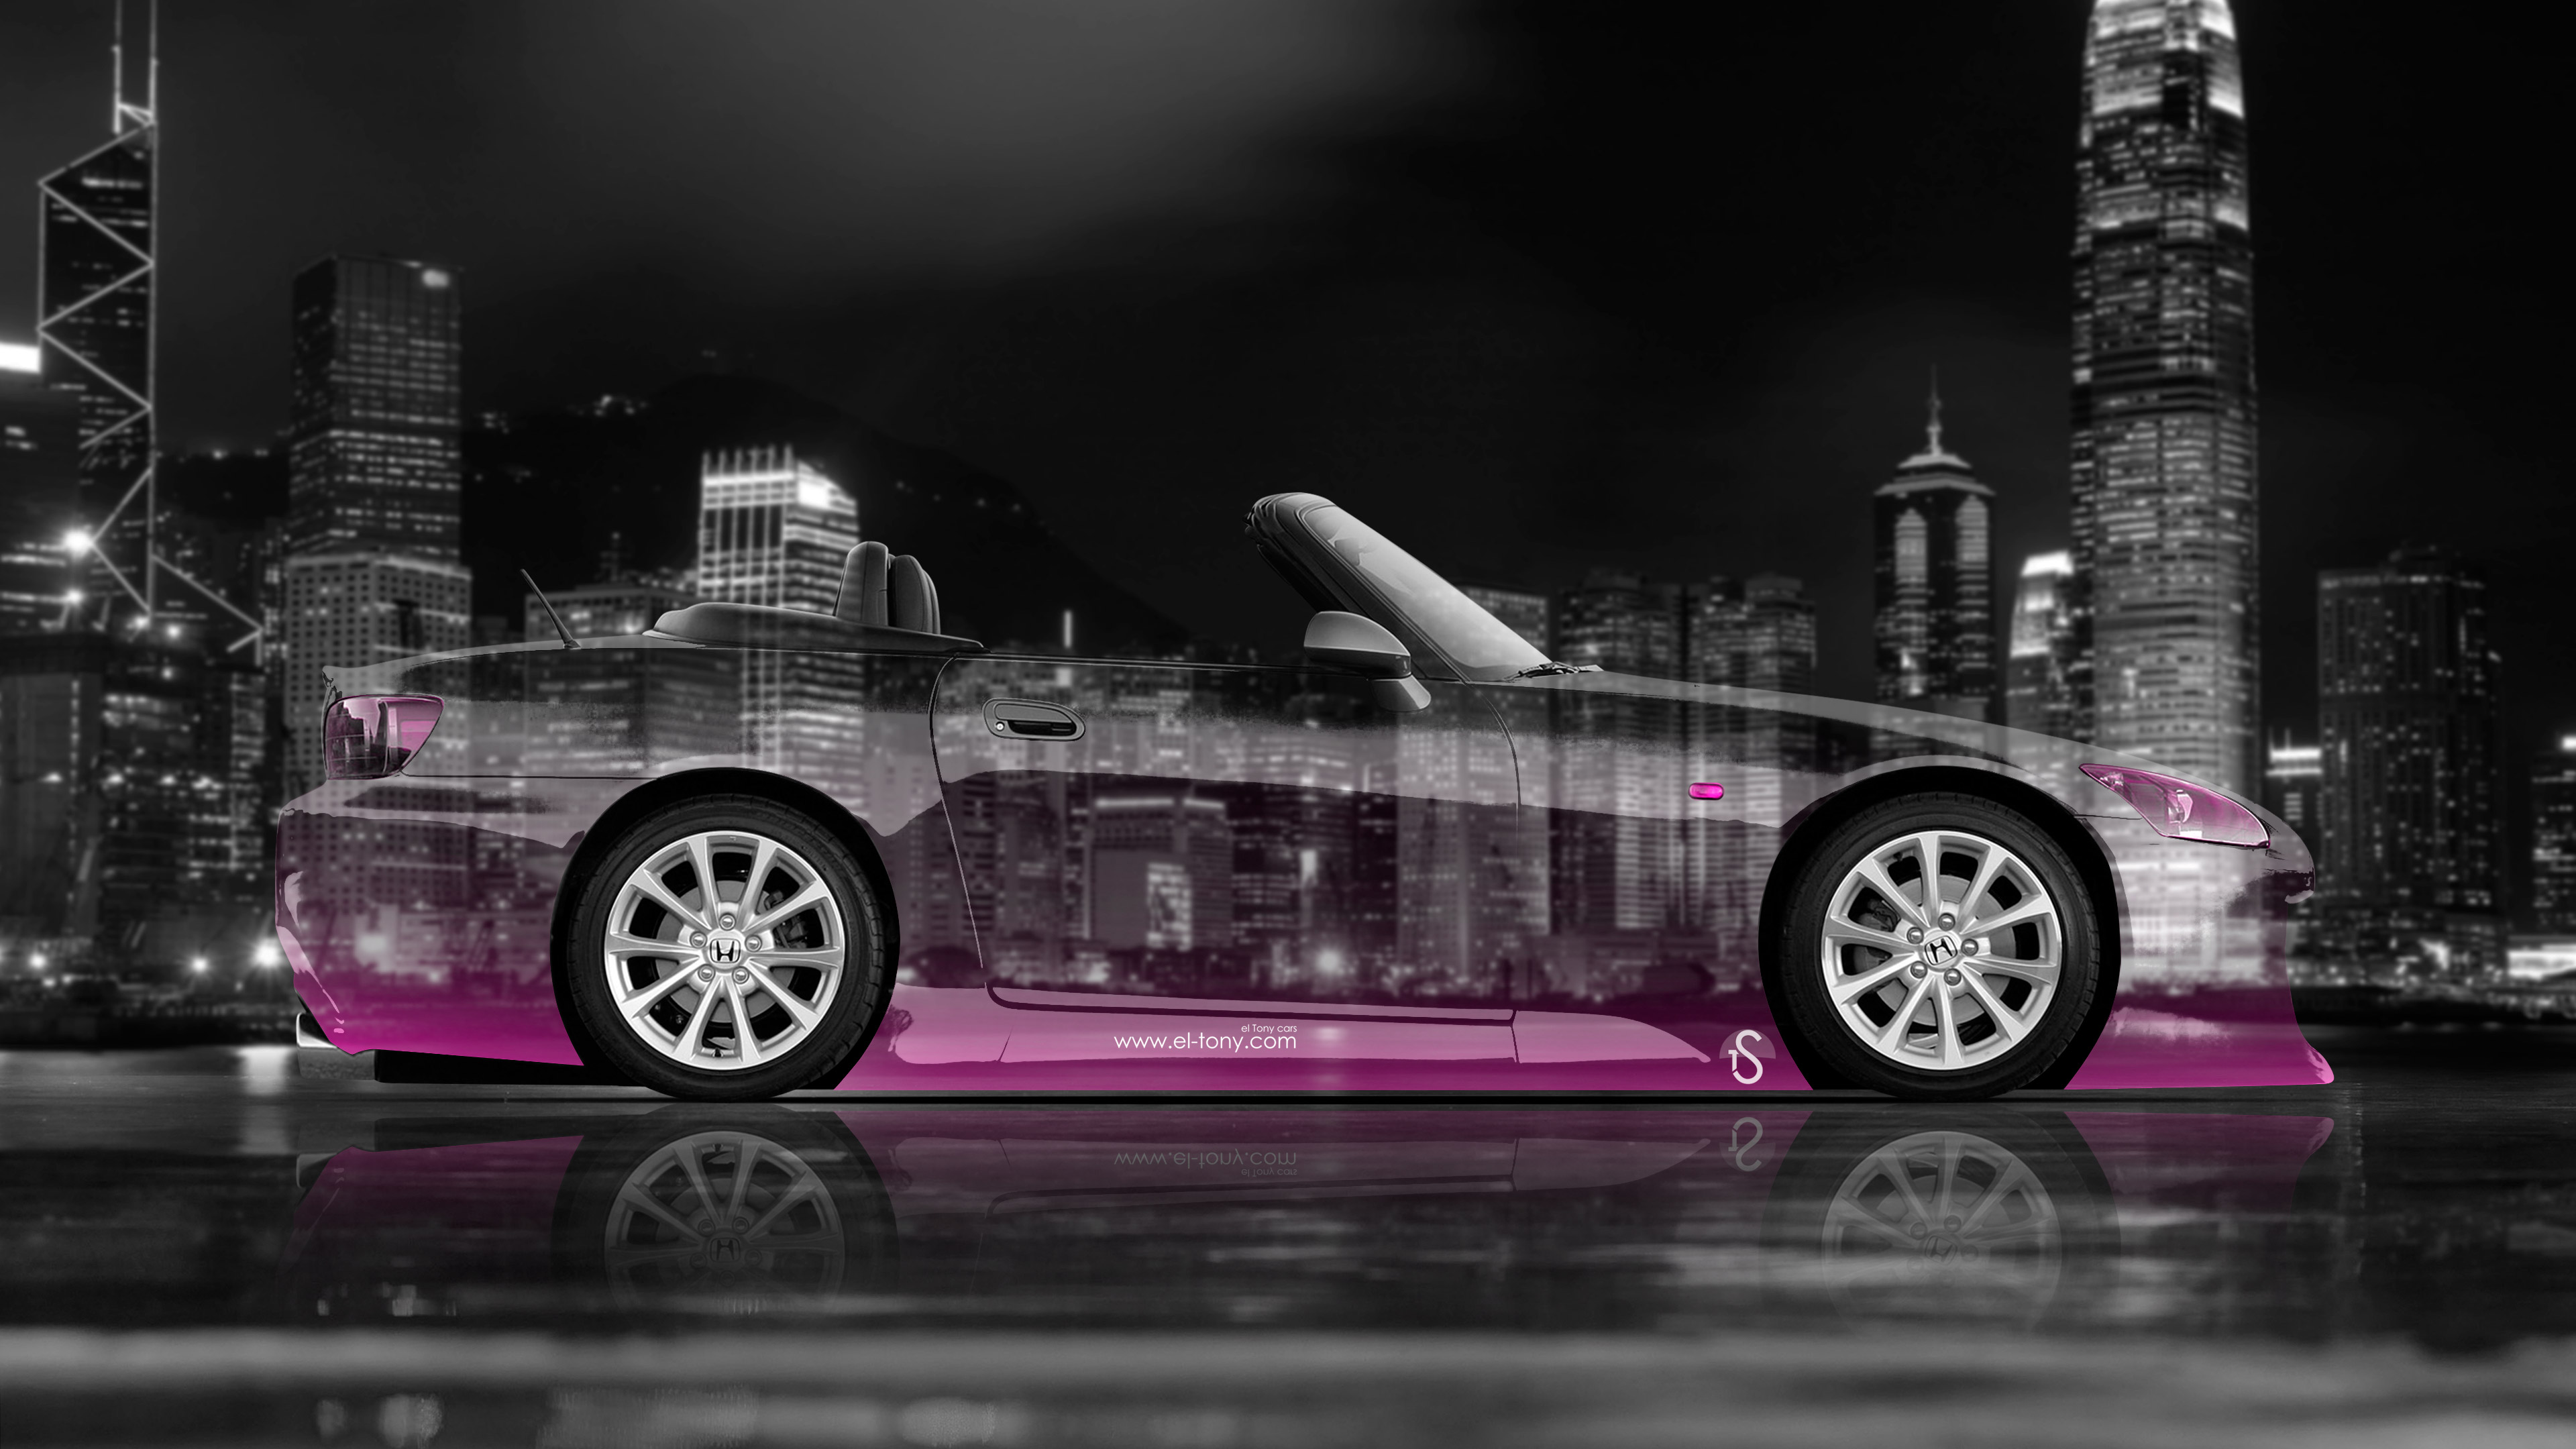 S2000 JDM Side Roadster Crystal City Car 2014 Pink Neon 4K Wallpapers